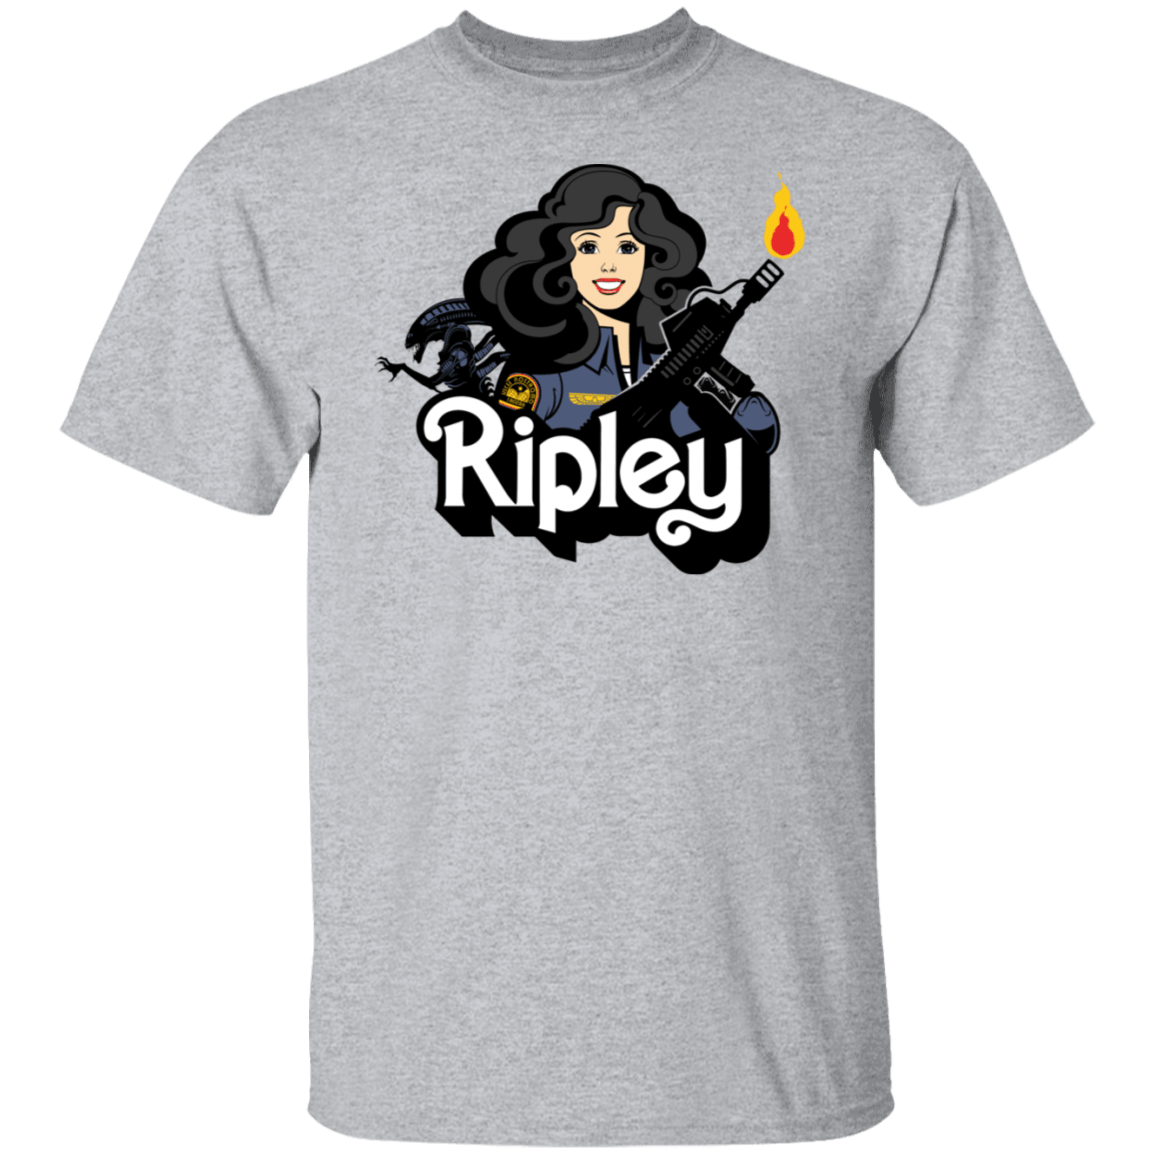 T-Shirts Sport Grey / S Ripley T-Shirt